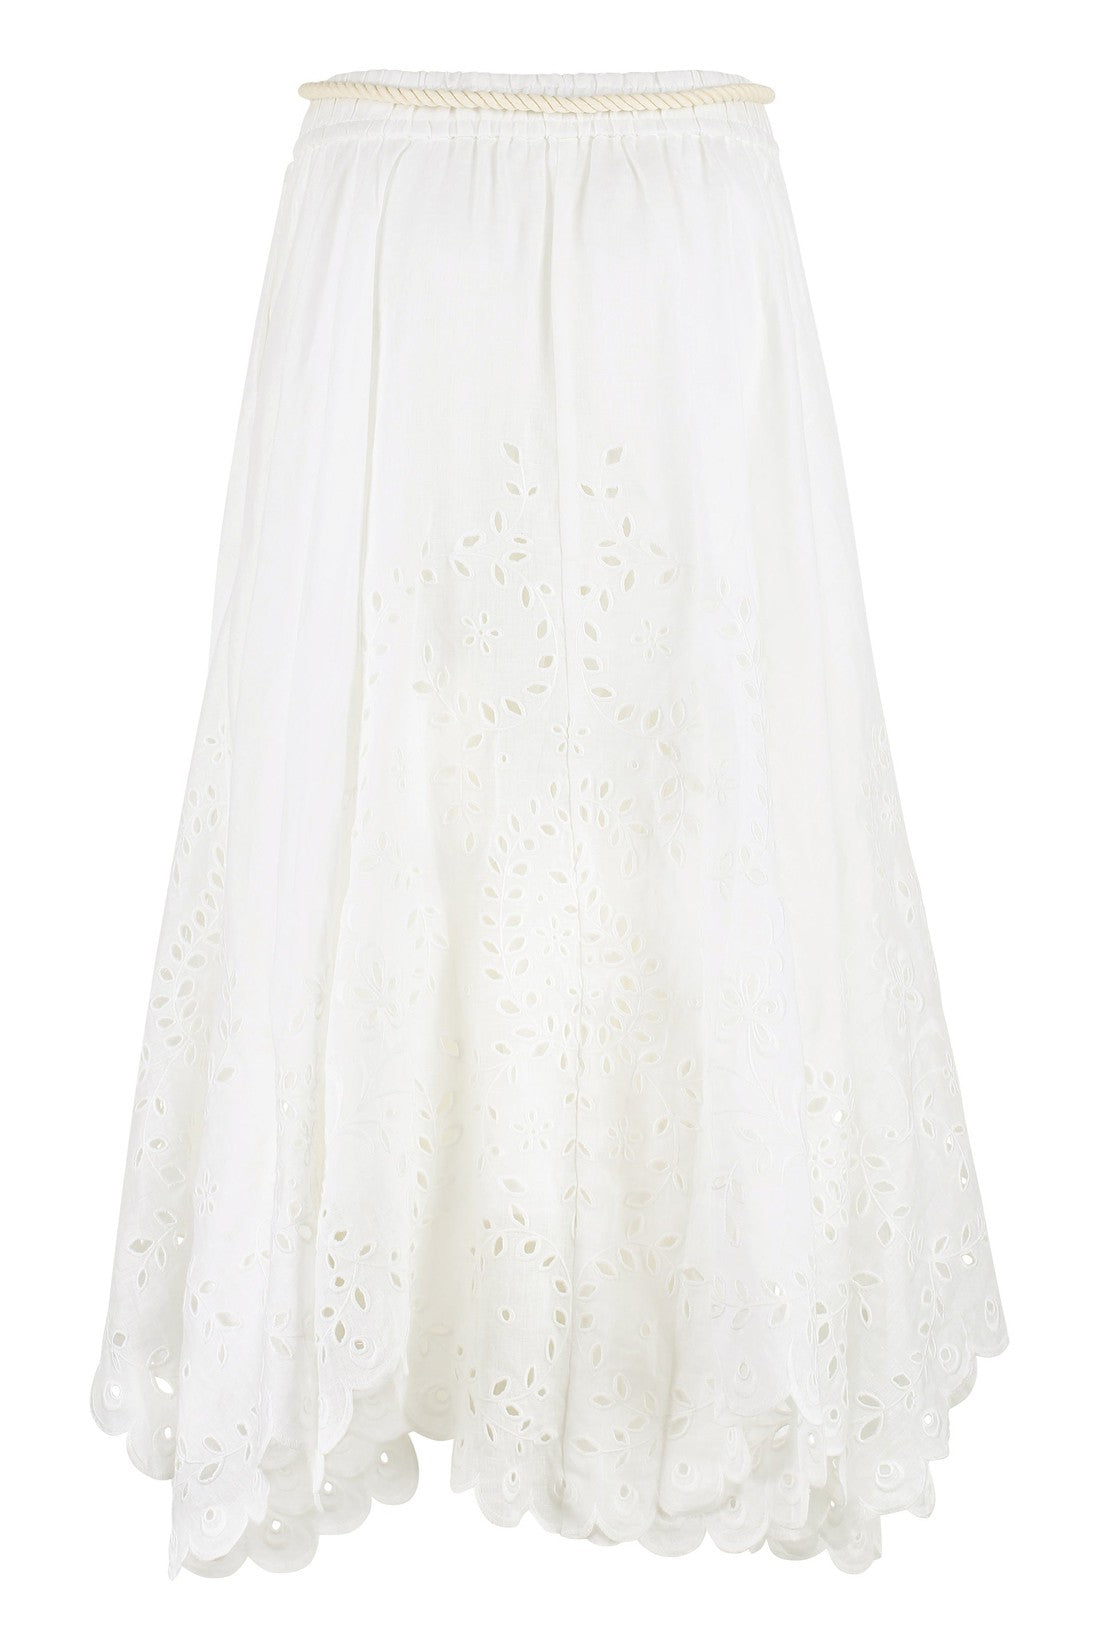 Zimmermann-OUTLET-SALE-Embroidered linen skirt-ARCHIVIST